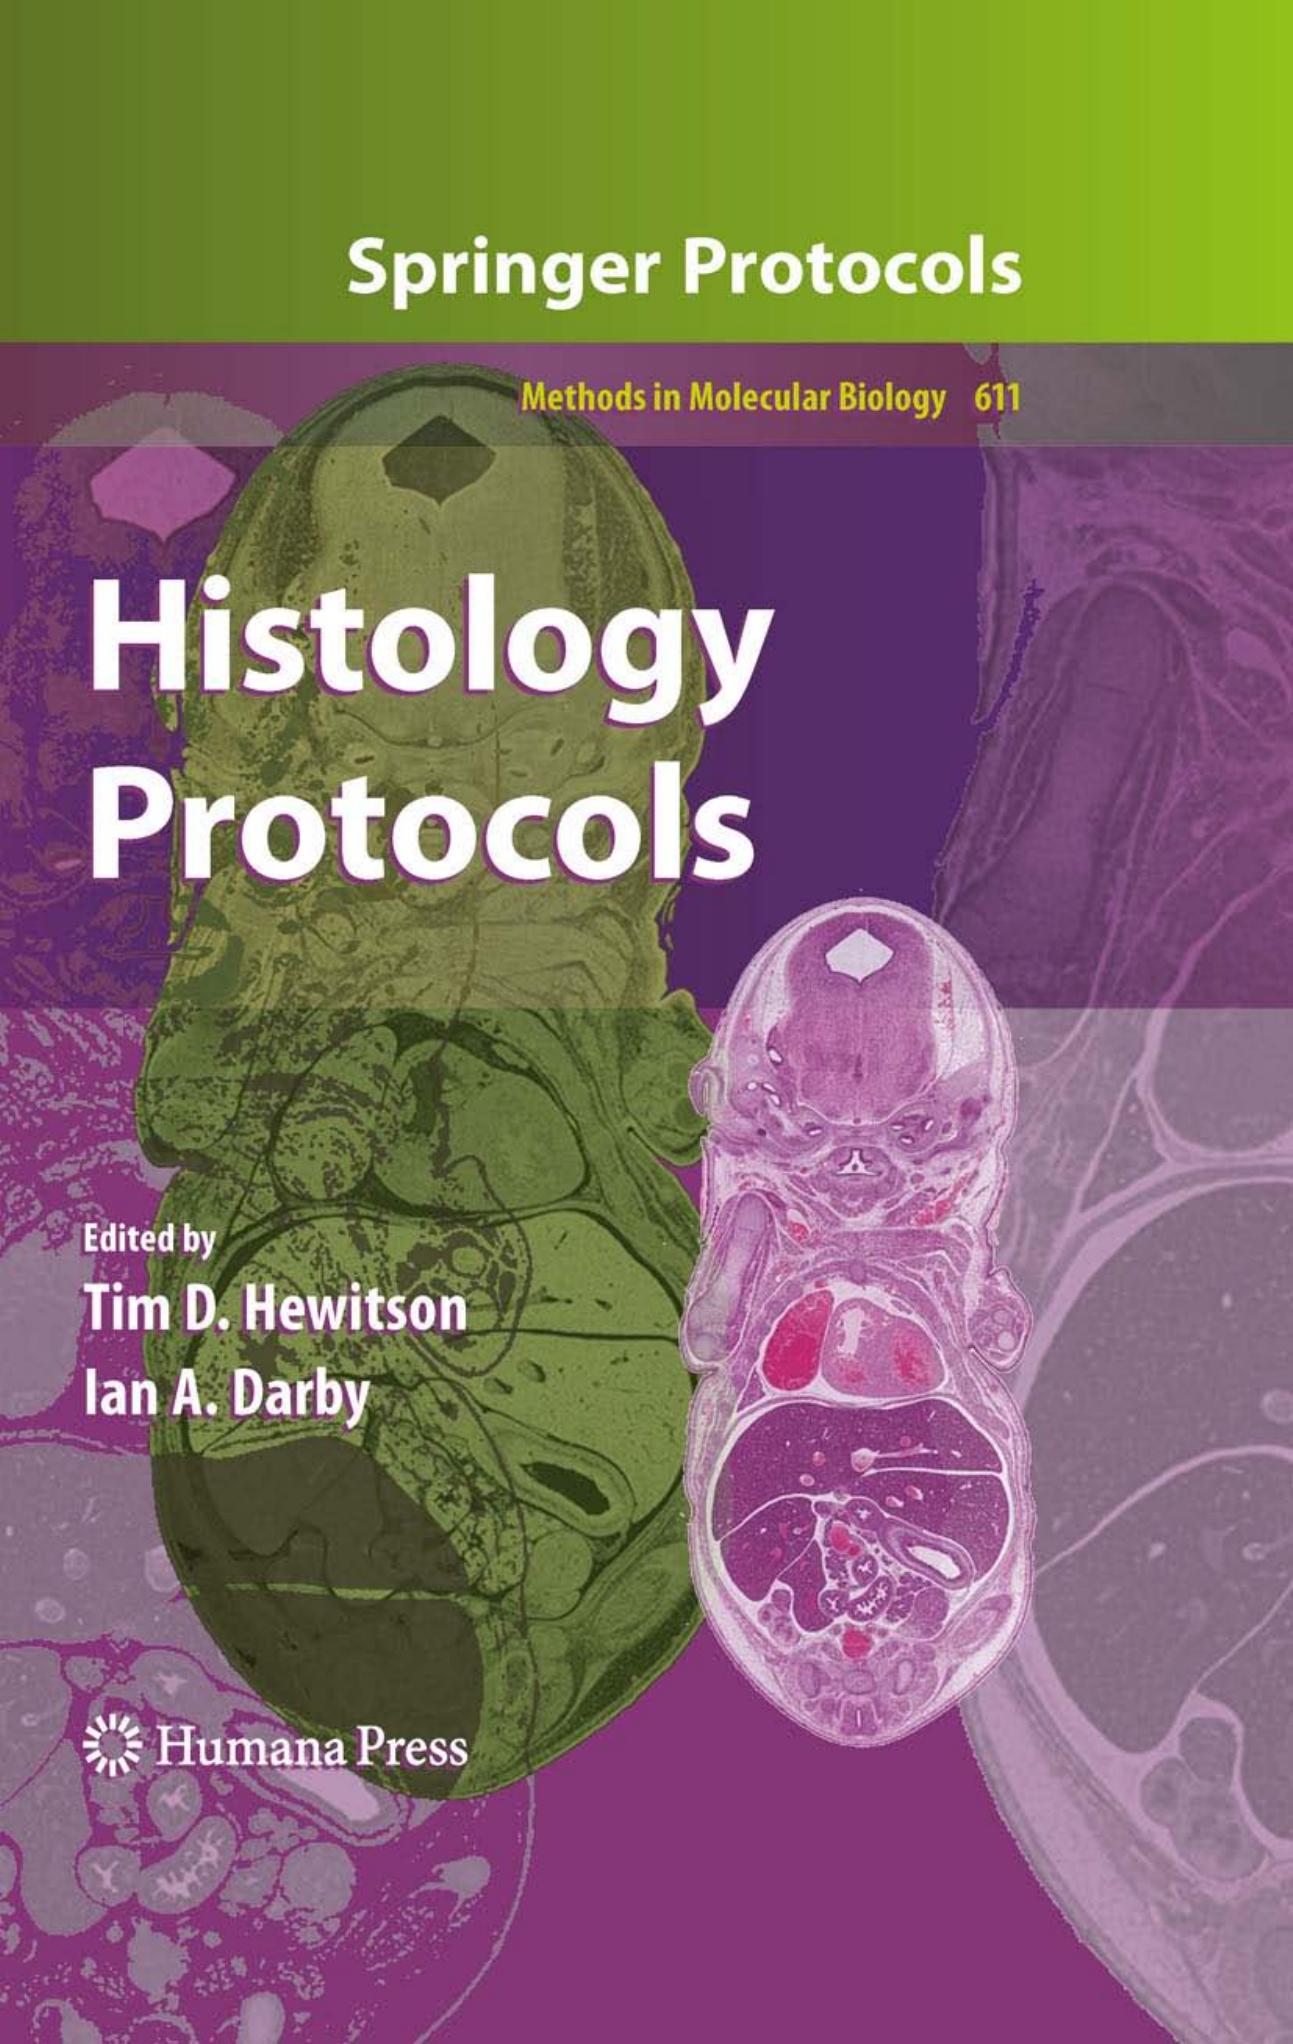 histology-protocols 2010